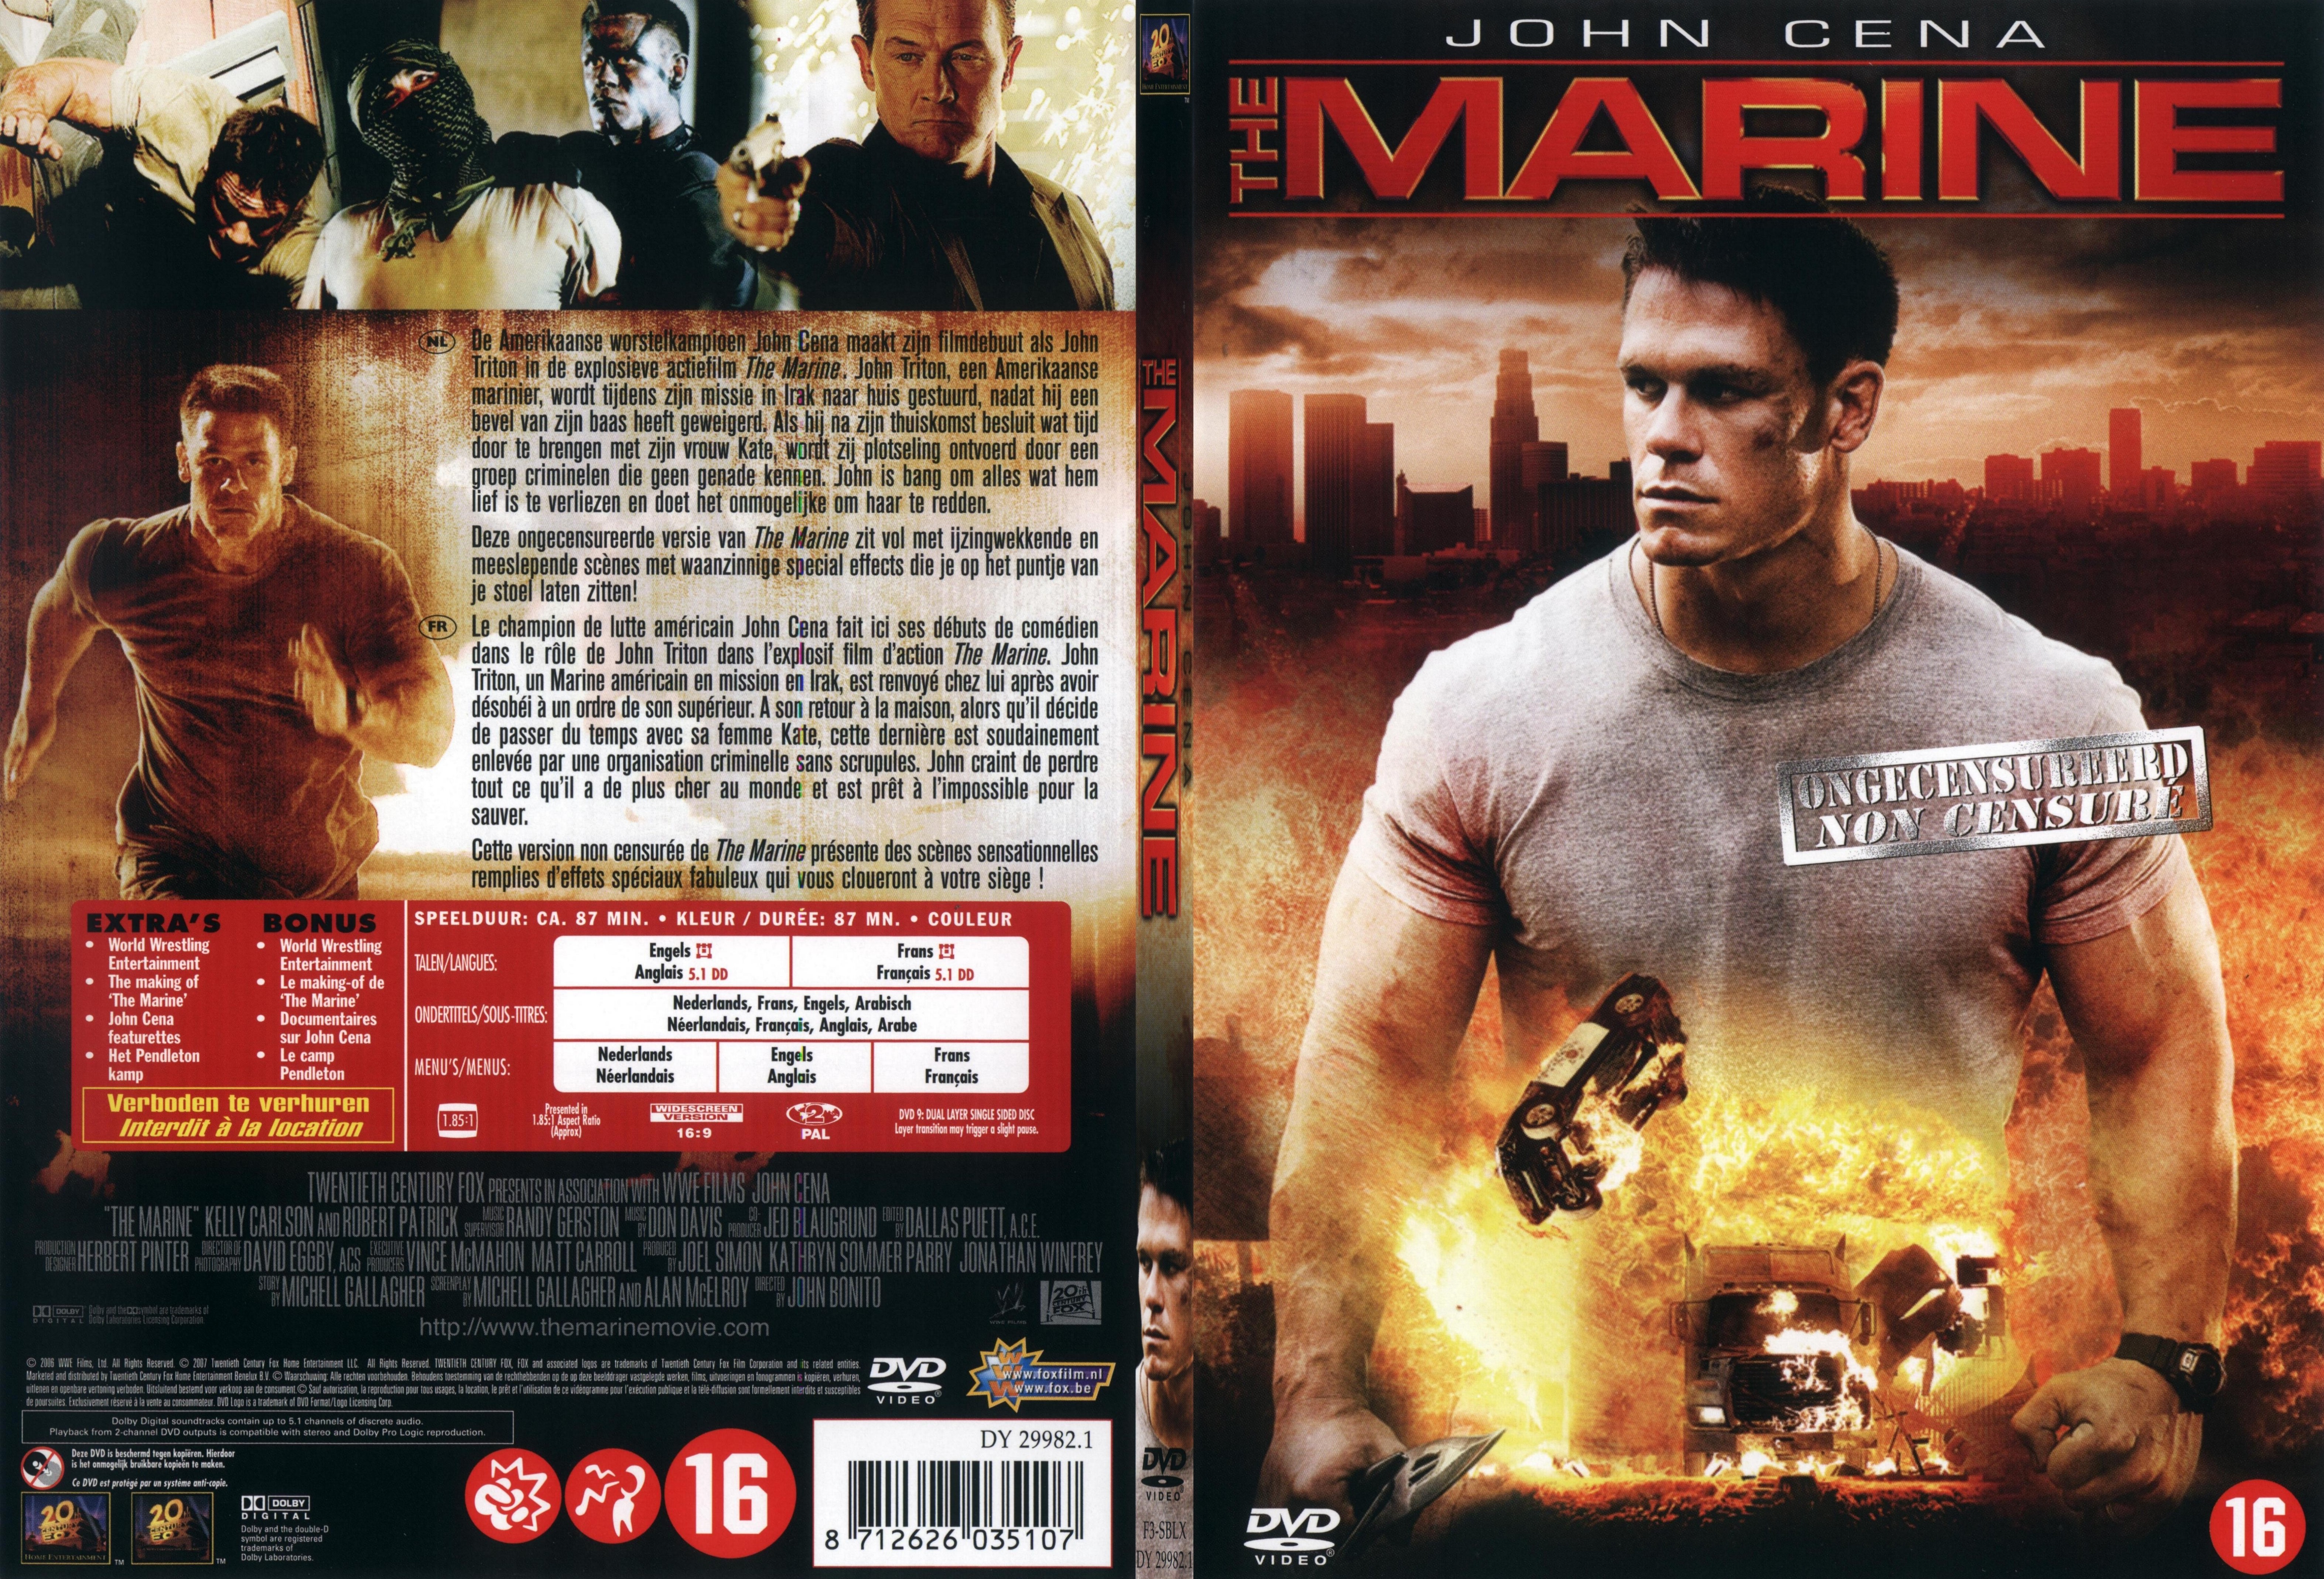 Jaquette DVD The marine - SLIM